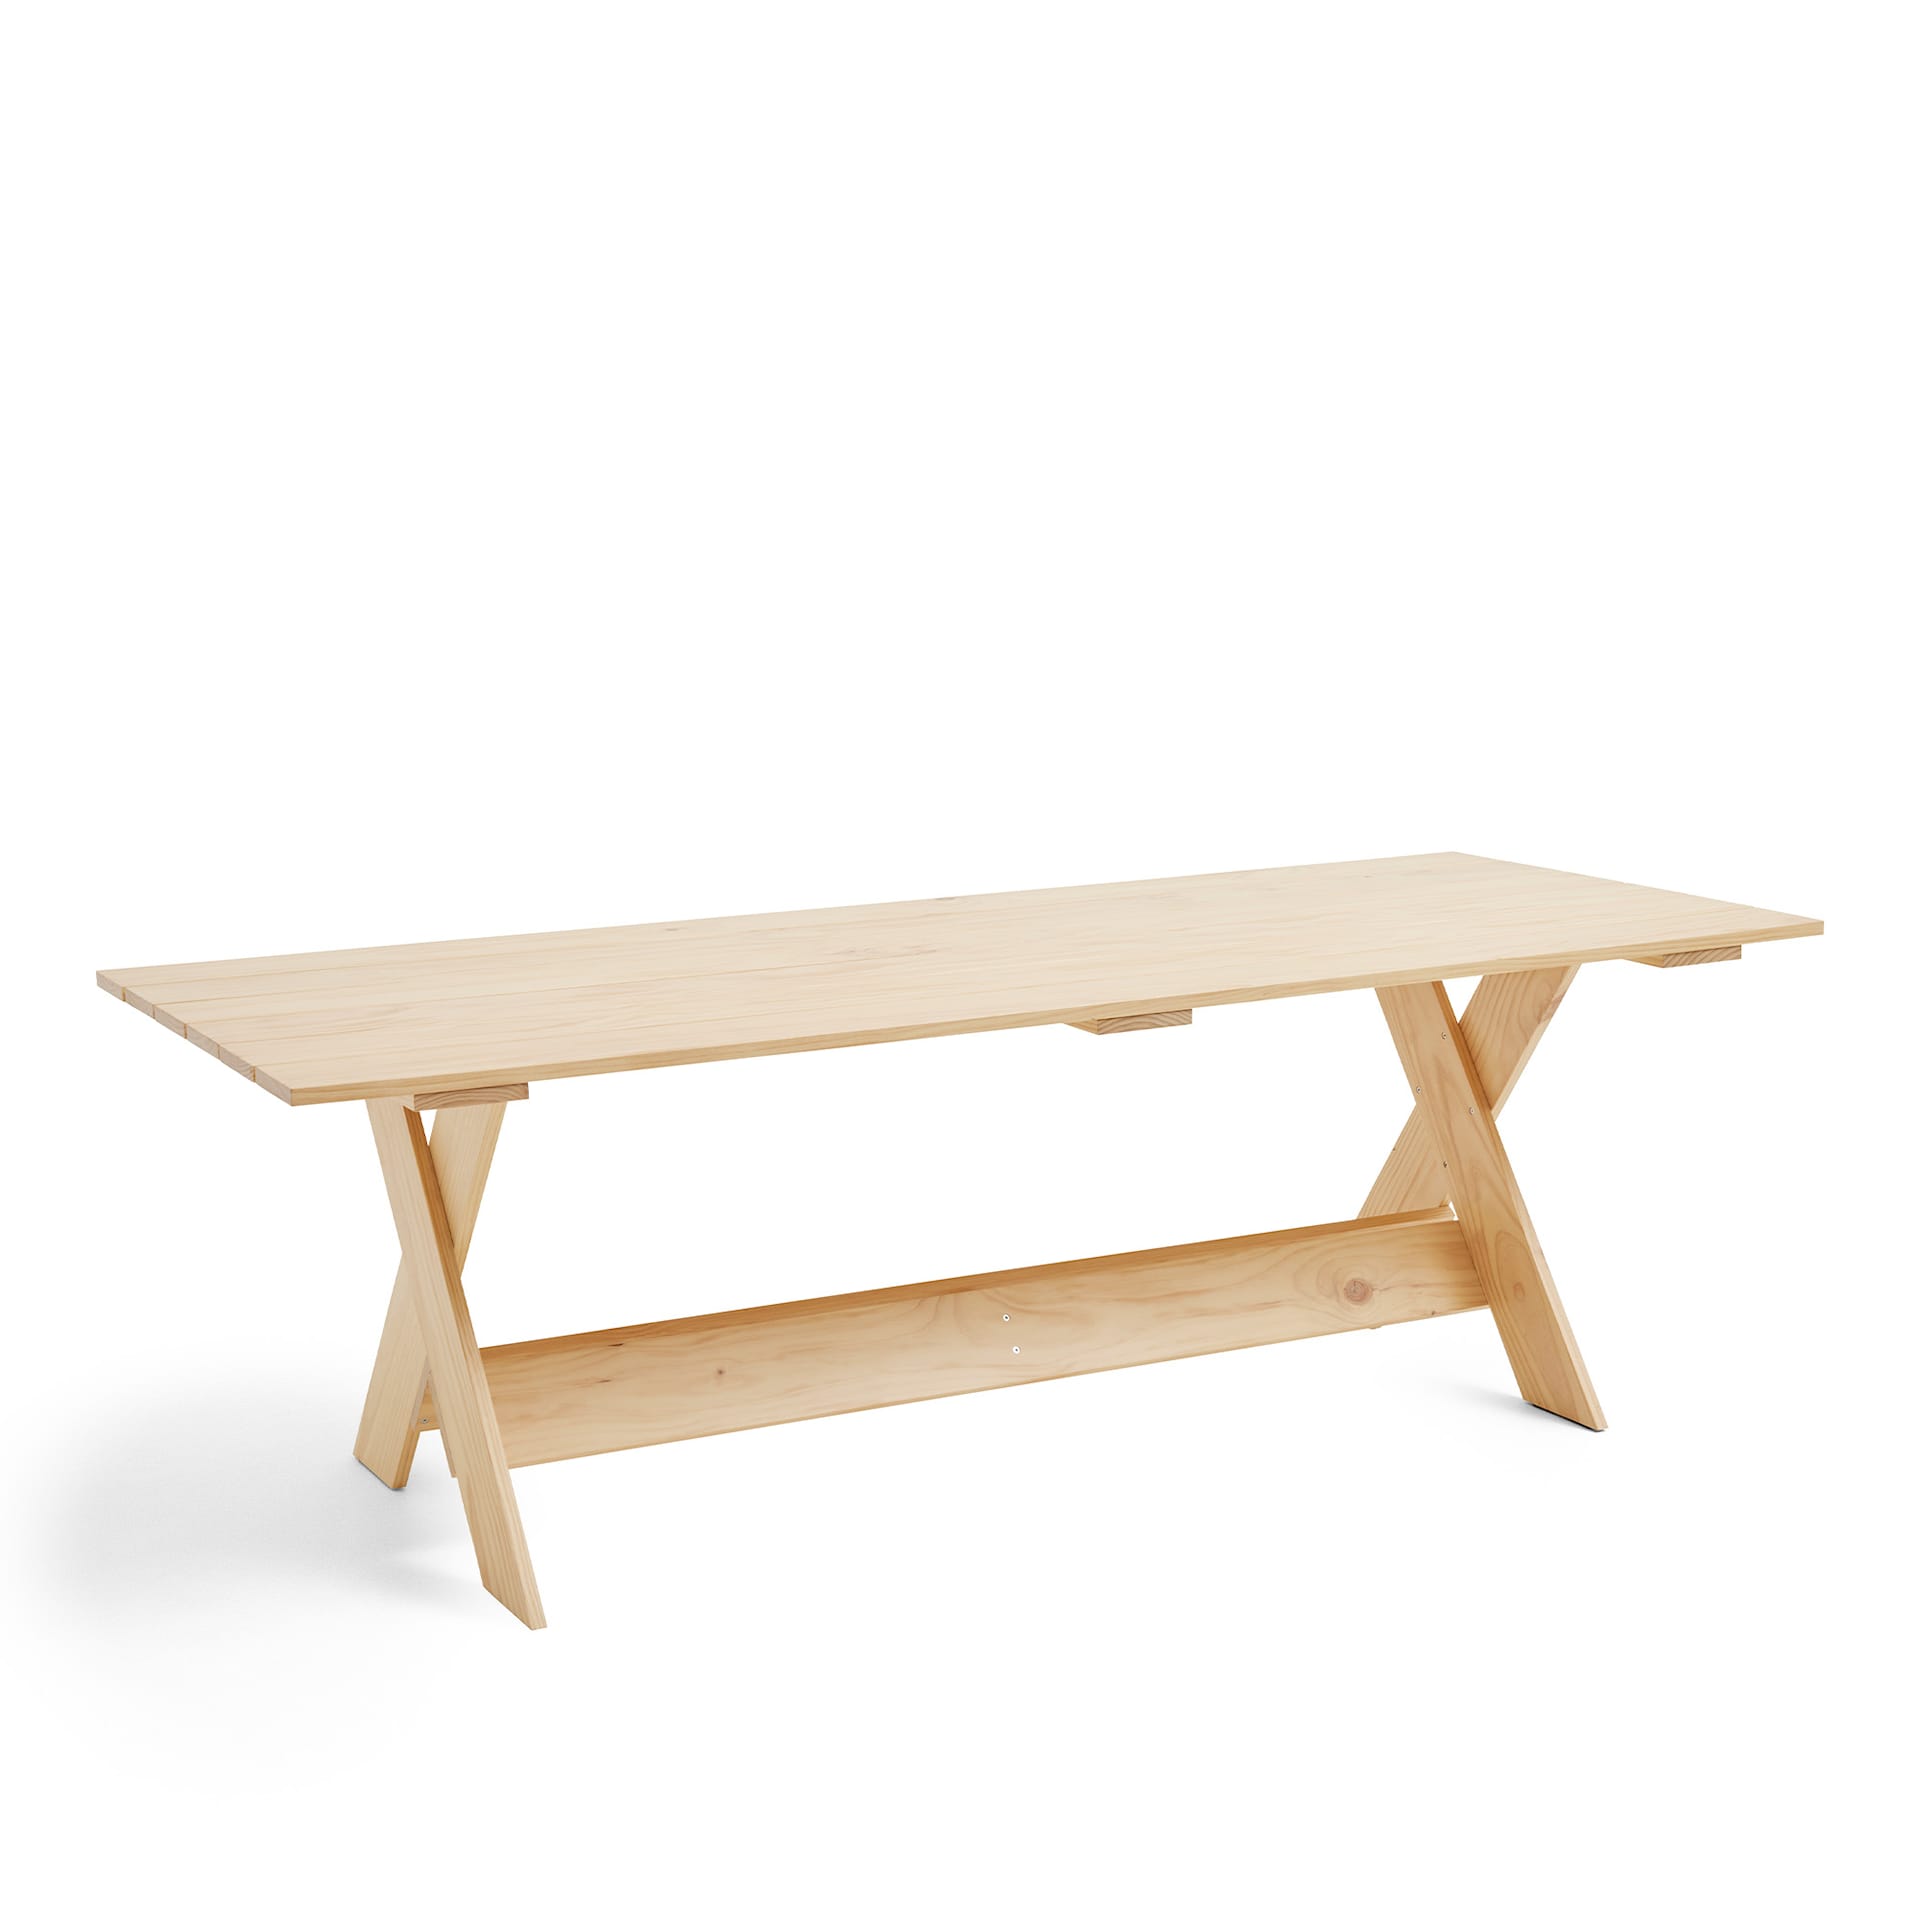 Crate Dining Table 230 cm - HAY - Gerrit Rietveld - NO GA